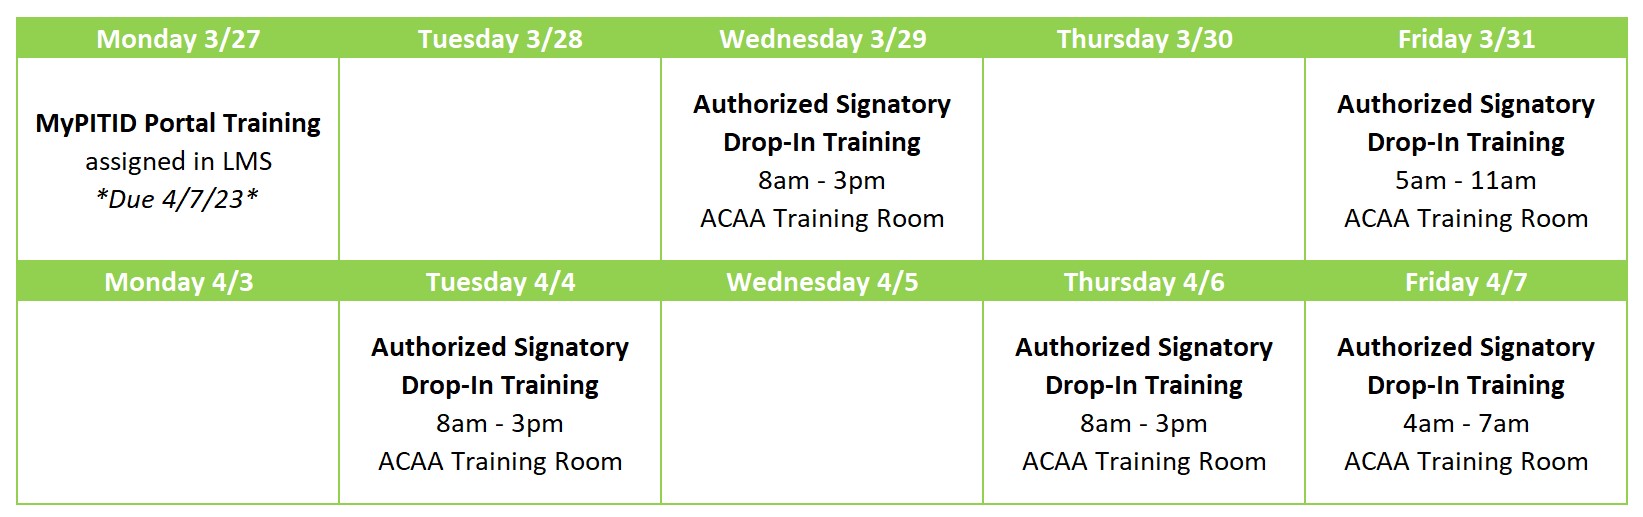 Authorized Signatory Training Calendar